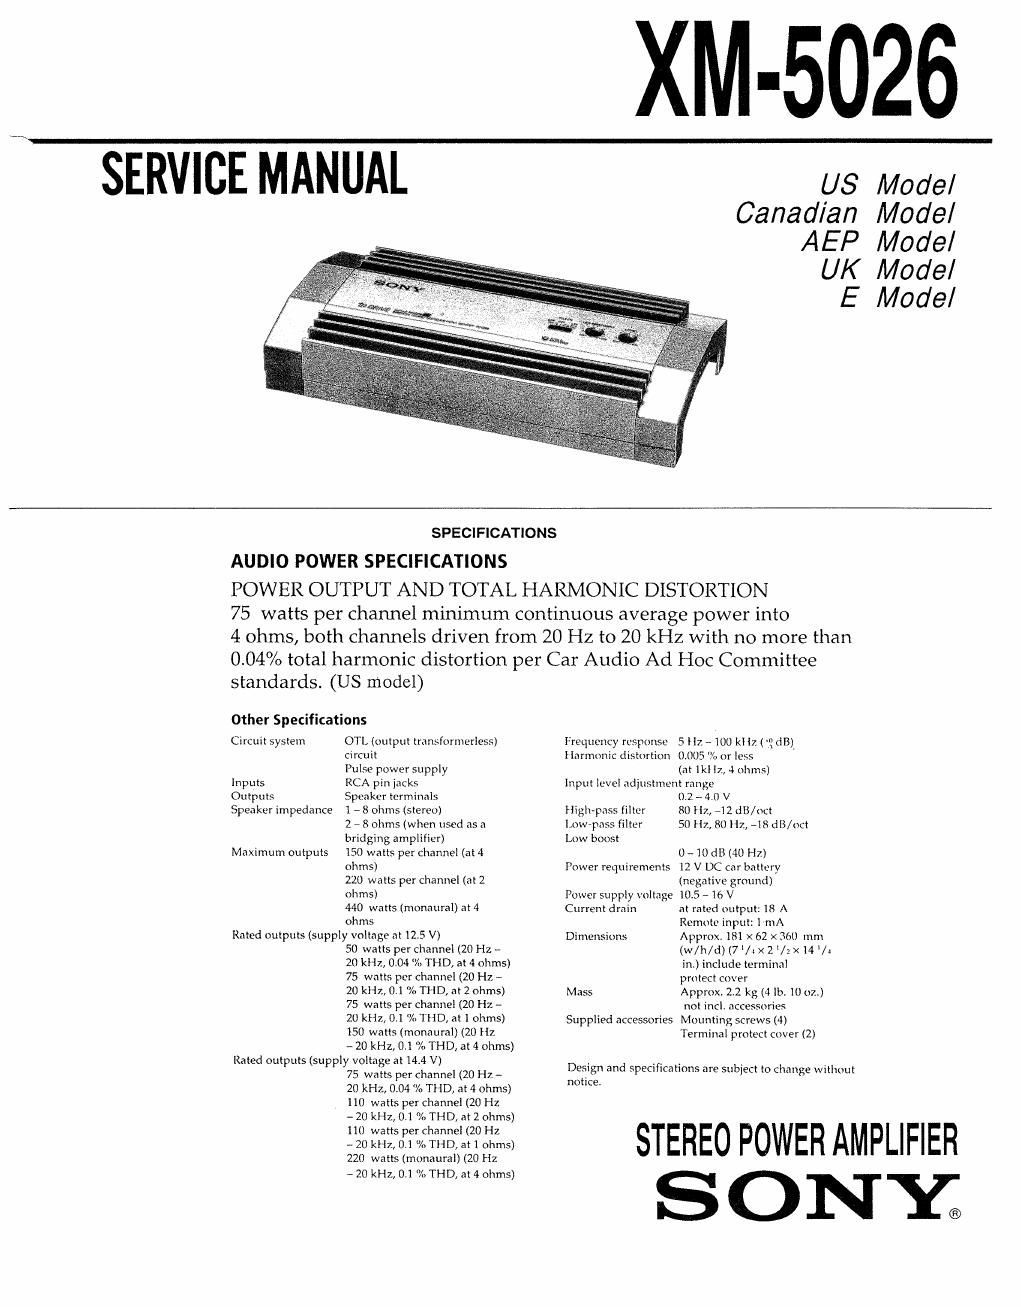 sony xm 5026 service manual